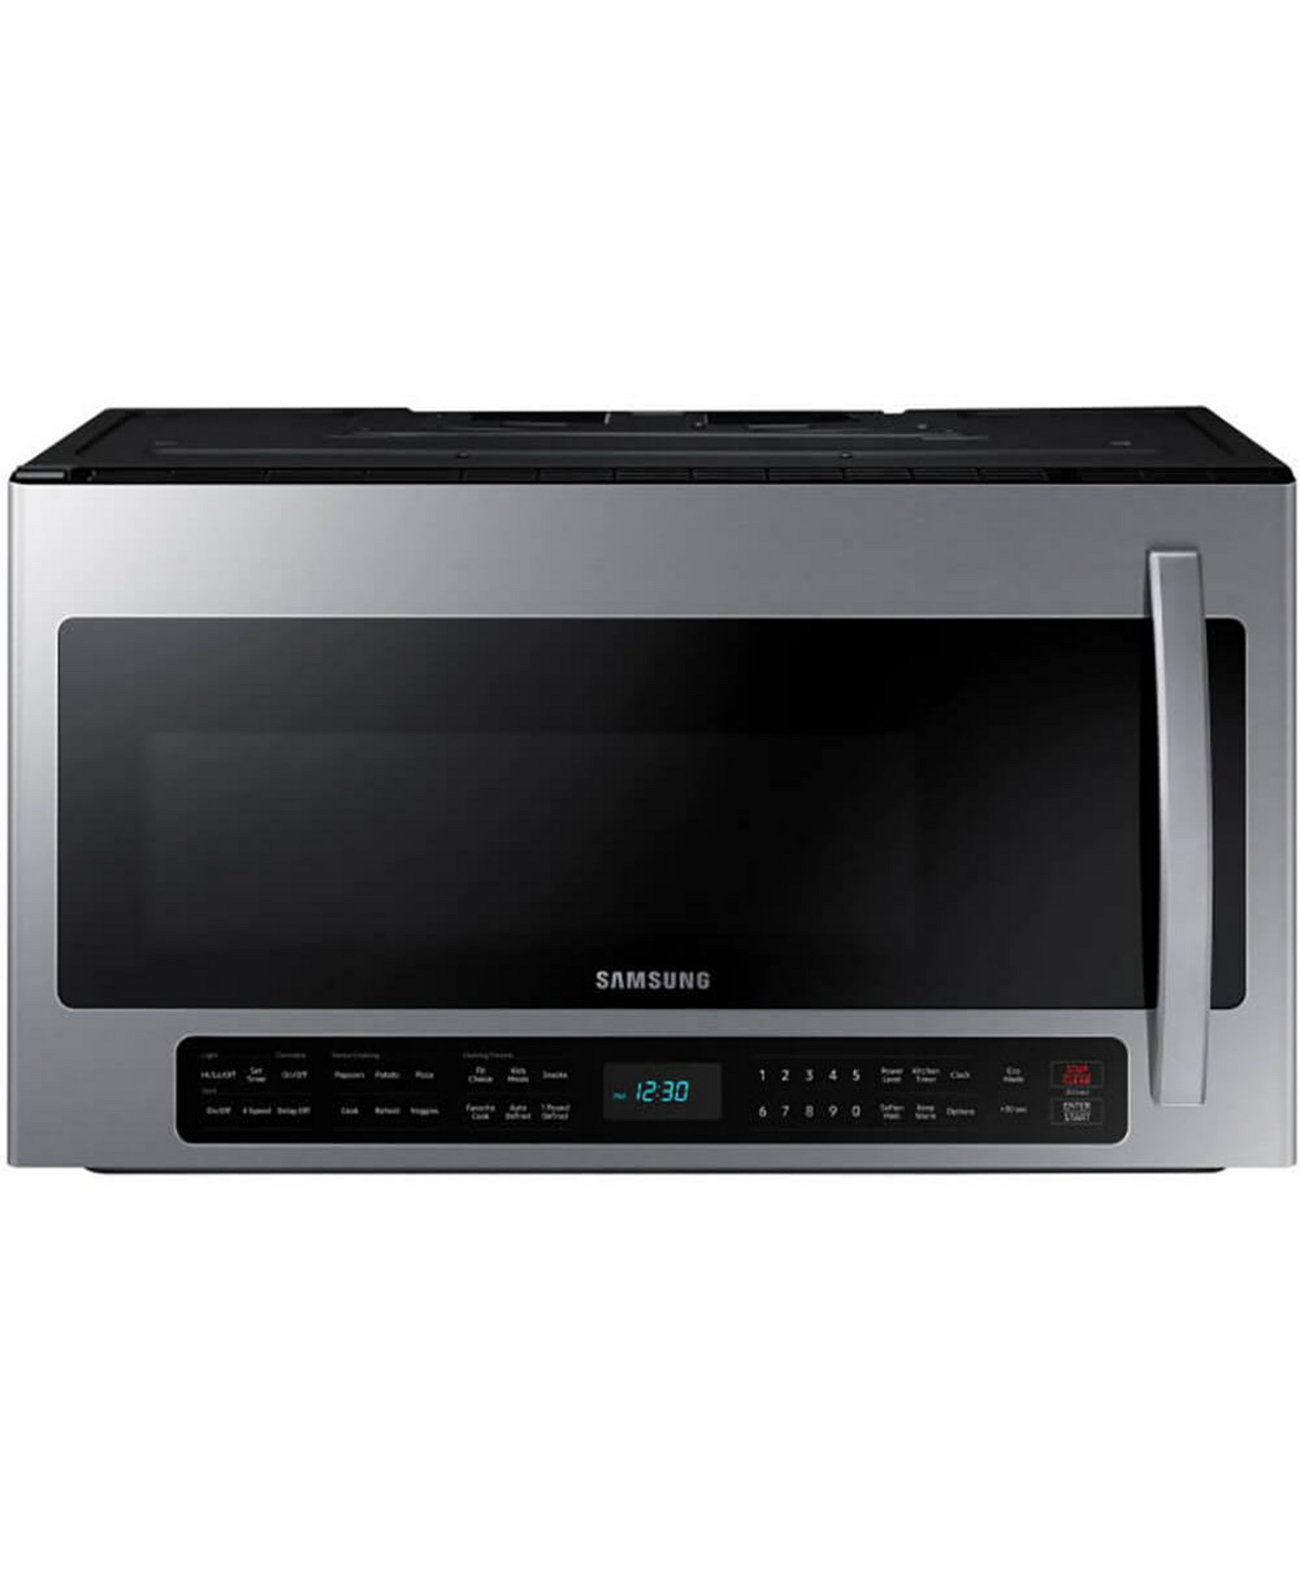 Samsung Smart Oven. Samsung Microwave over the range. Samsung over the range Microwaves. Микроволновая печь самсунг 1000w. Самсунг стал черно белым